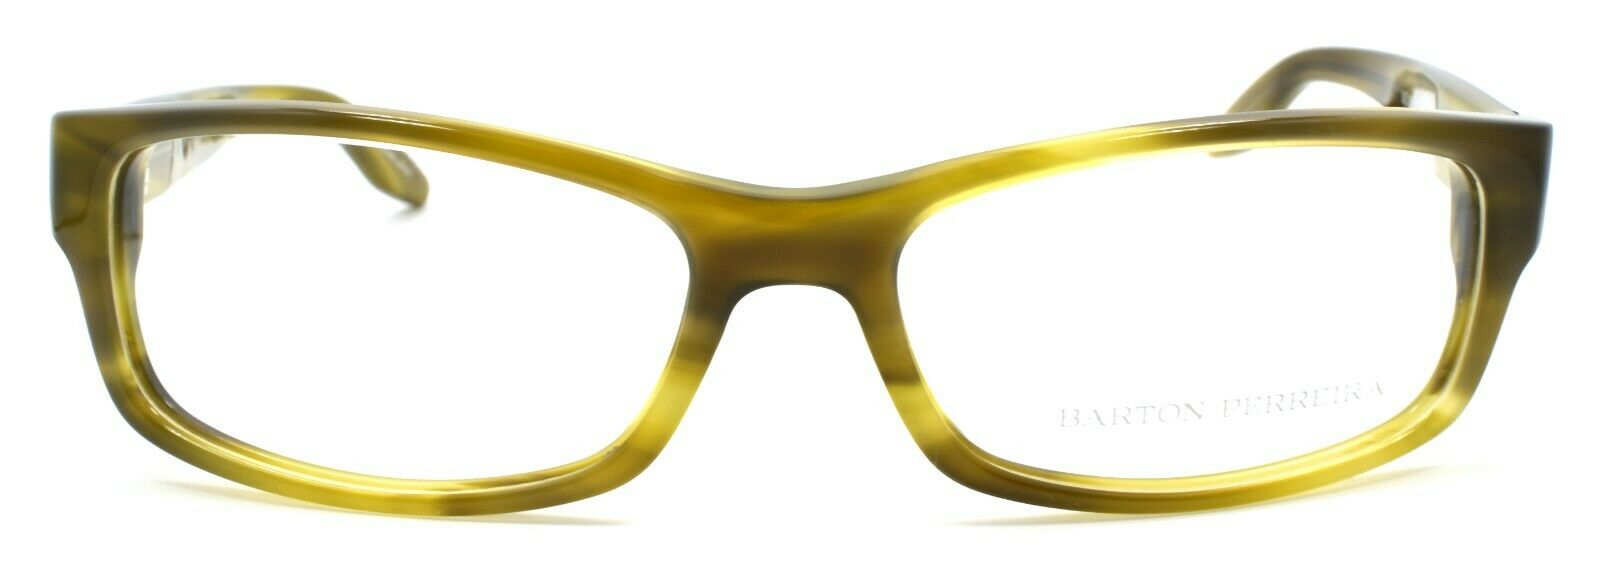 2-Barton Perreira The Associate SOT Unisex Glasses Frames 56-17-136 Olive Tortoise-672263039822-IKSpecs